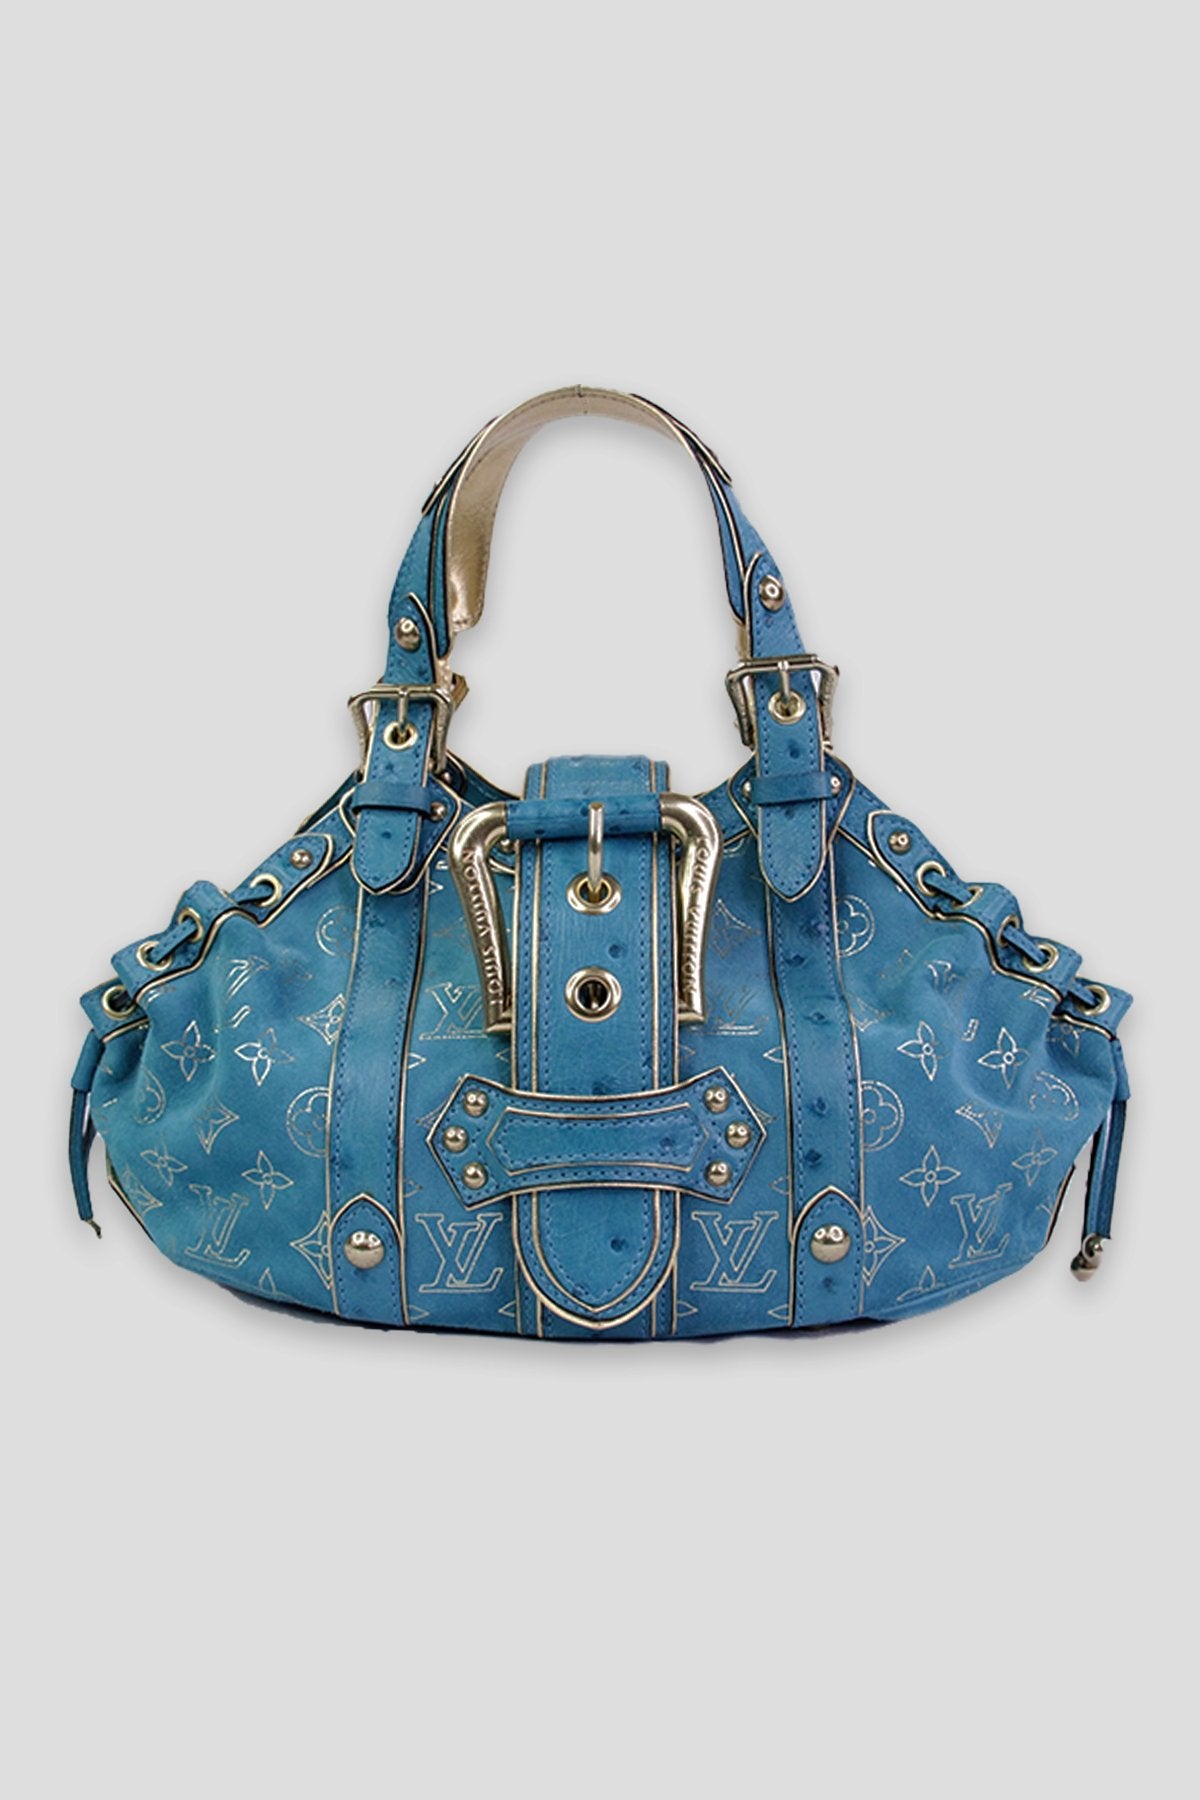 Louis Vuitton Turquoise and Gold Monogram Handbag